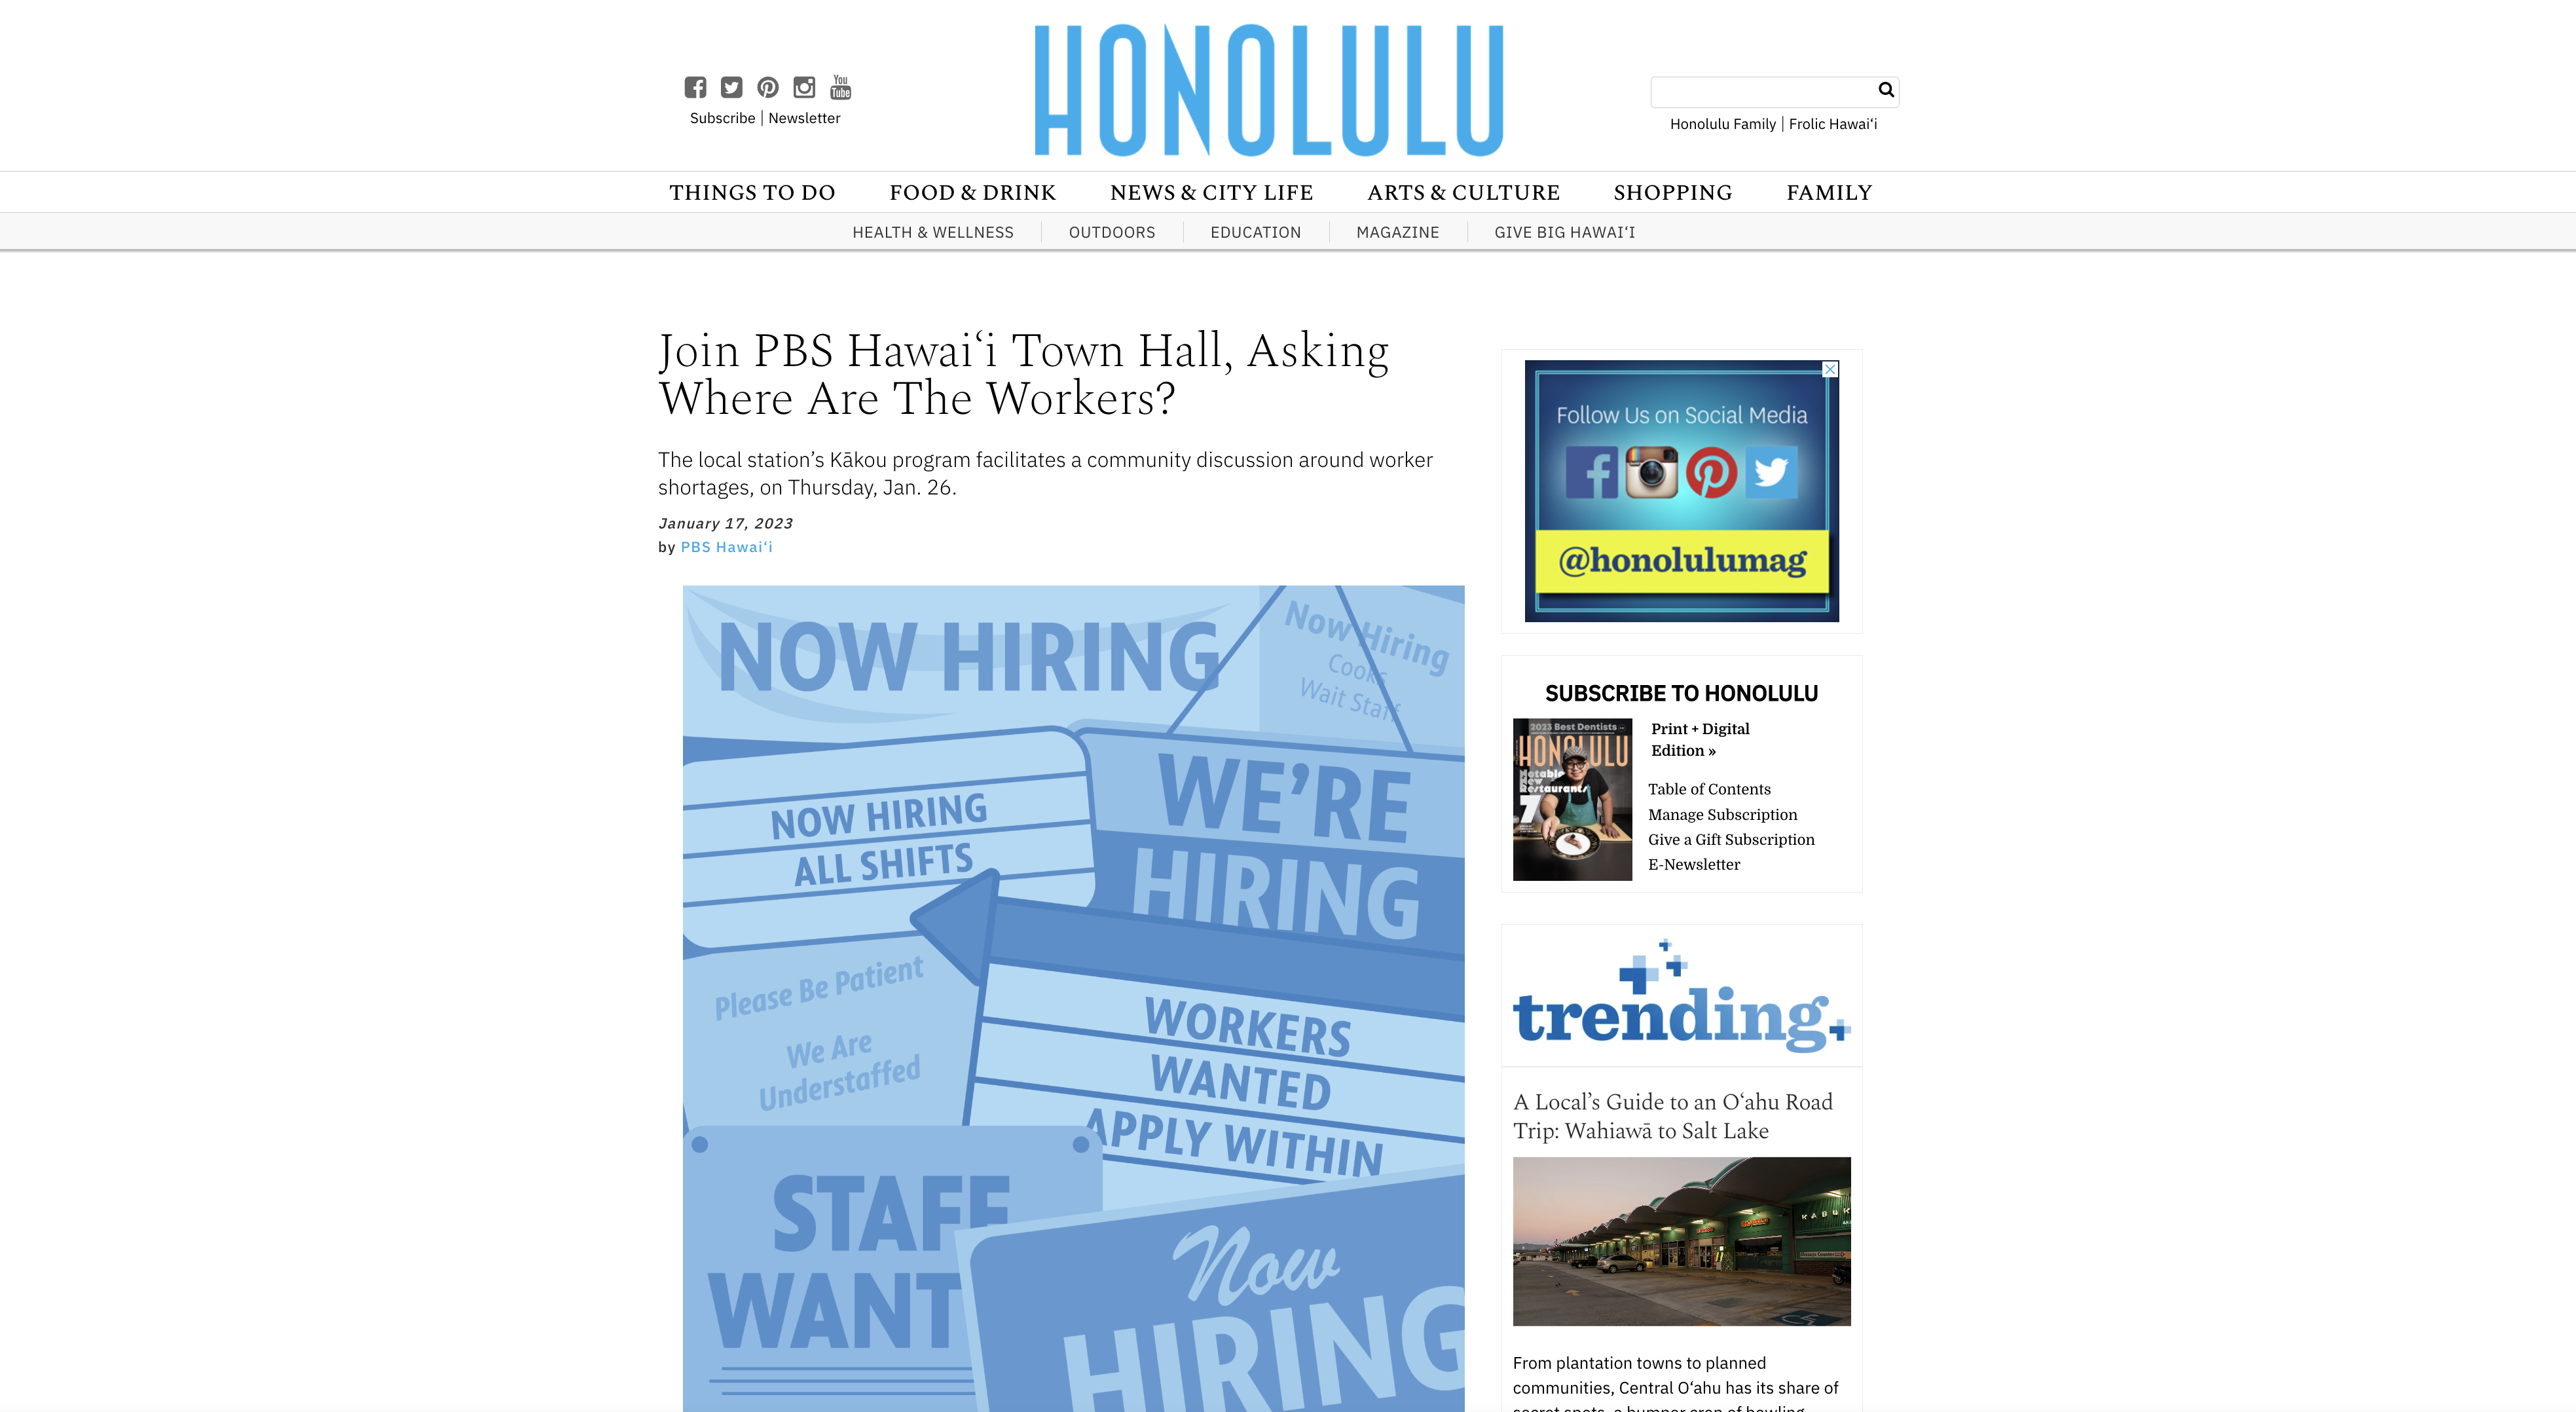 KĀKOU: Hawaiʻi’s Town Hall Where Are The Workers? in Honolulu Magazine